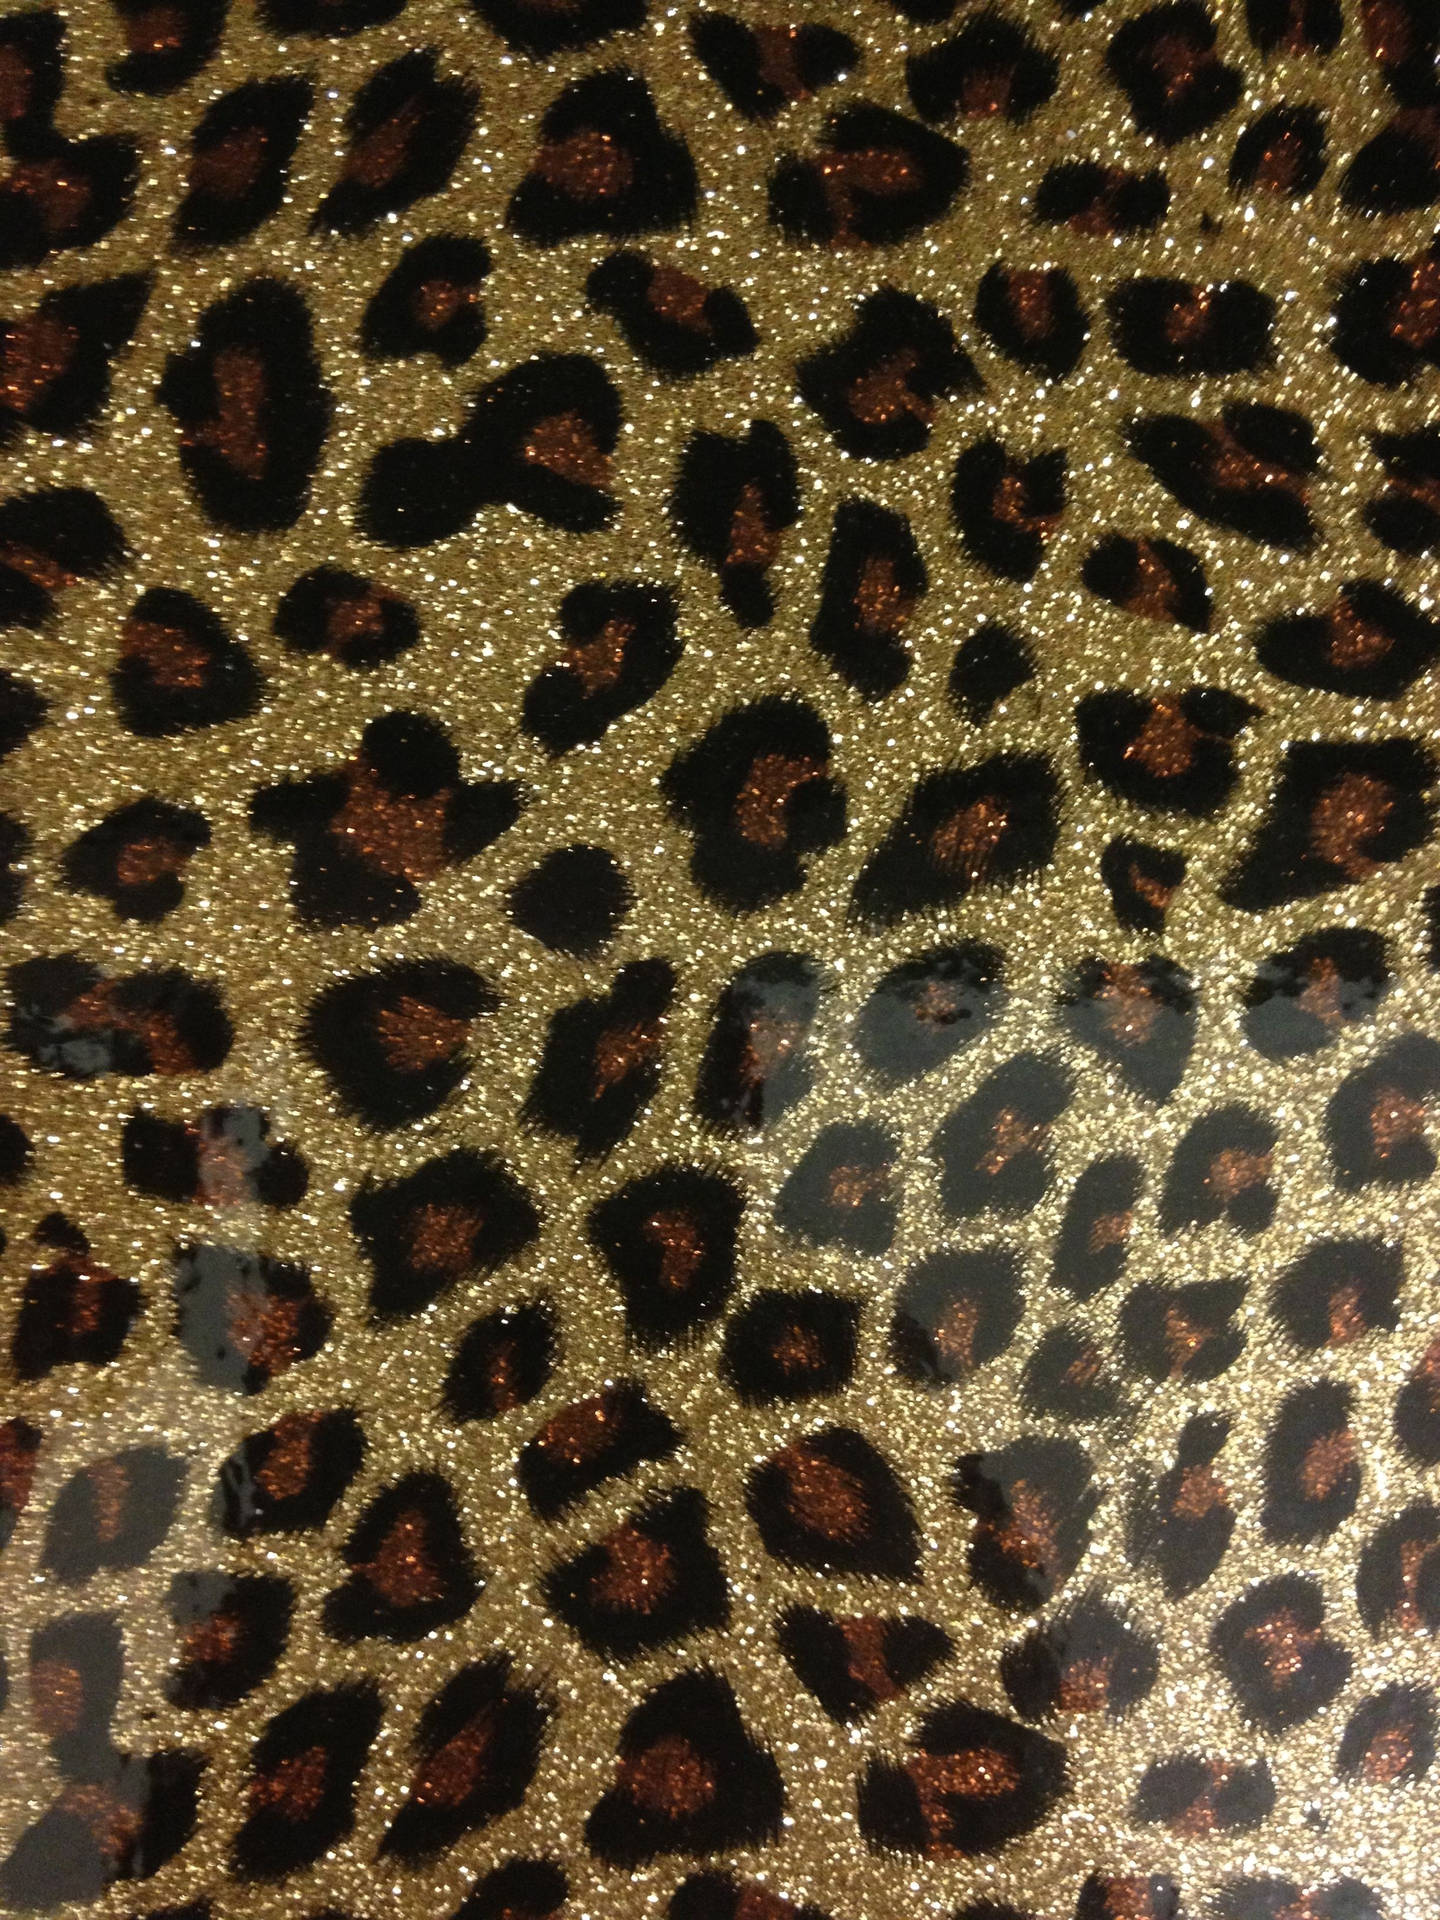 Gold Brown Glittery Leopard Print Background